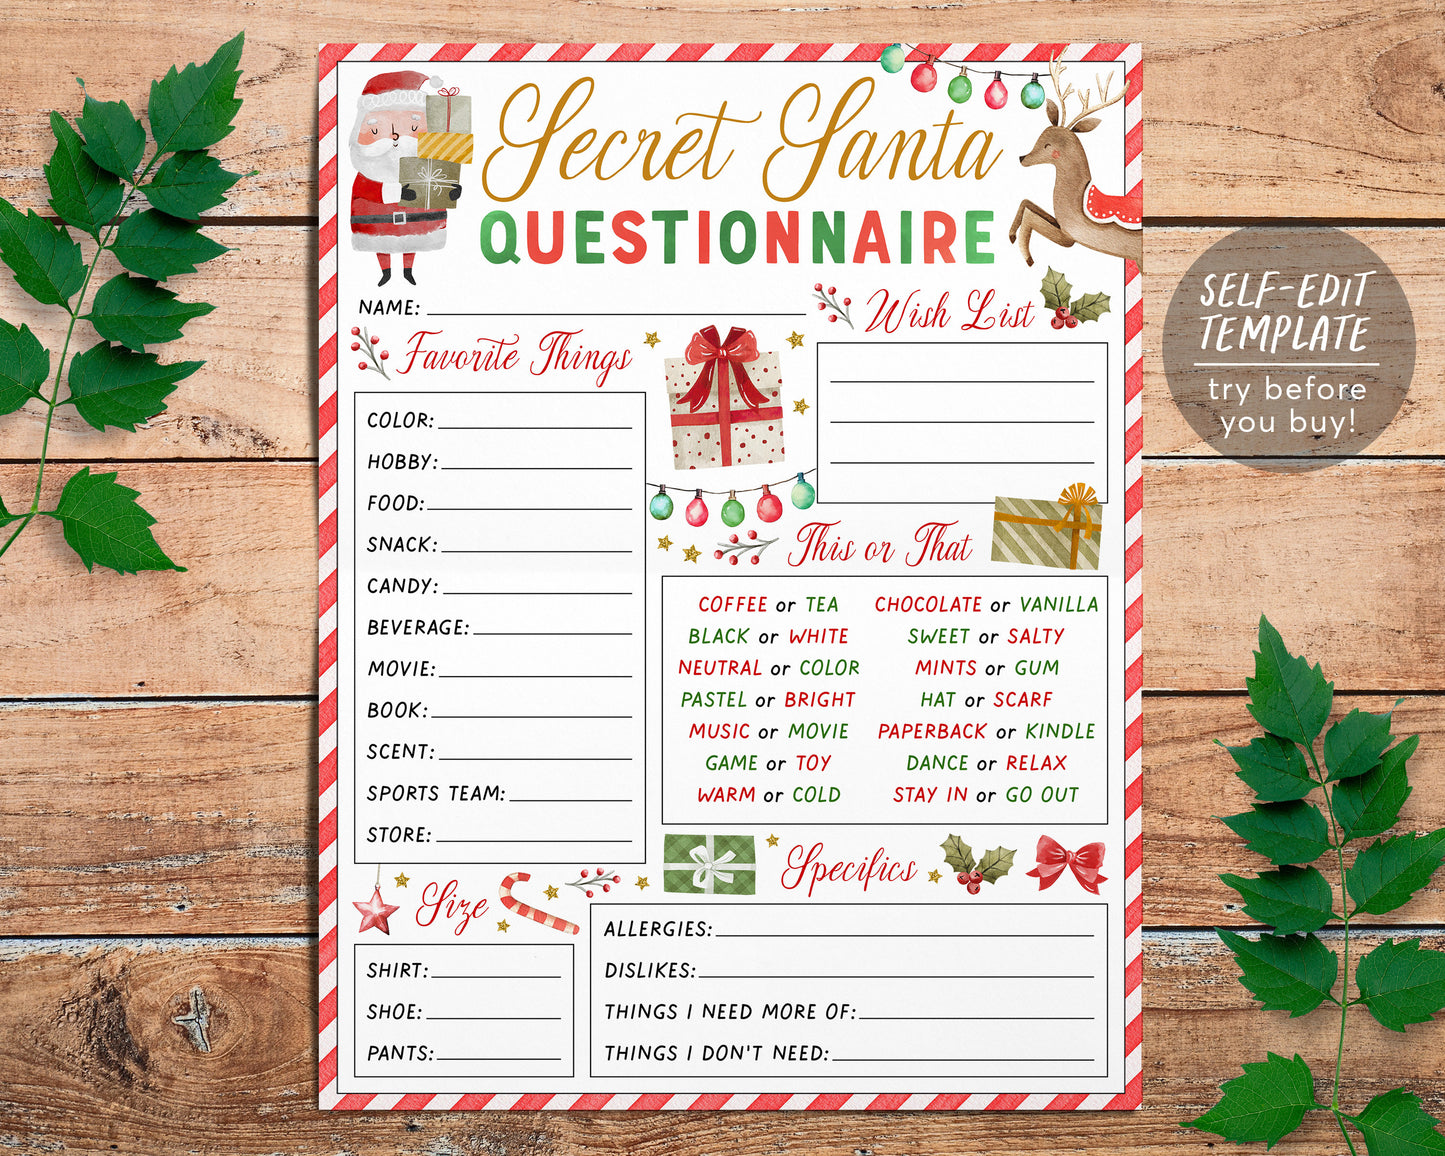 Secret Santa Gift Exchange Questionnaire Editable Template, Holiday Christmas Form Present Swap Wishlist Printable, Office Santa Party Games